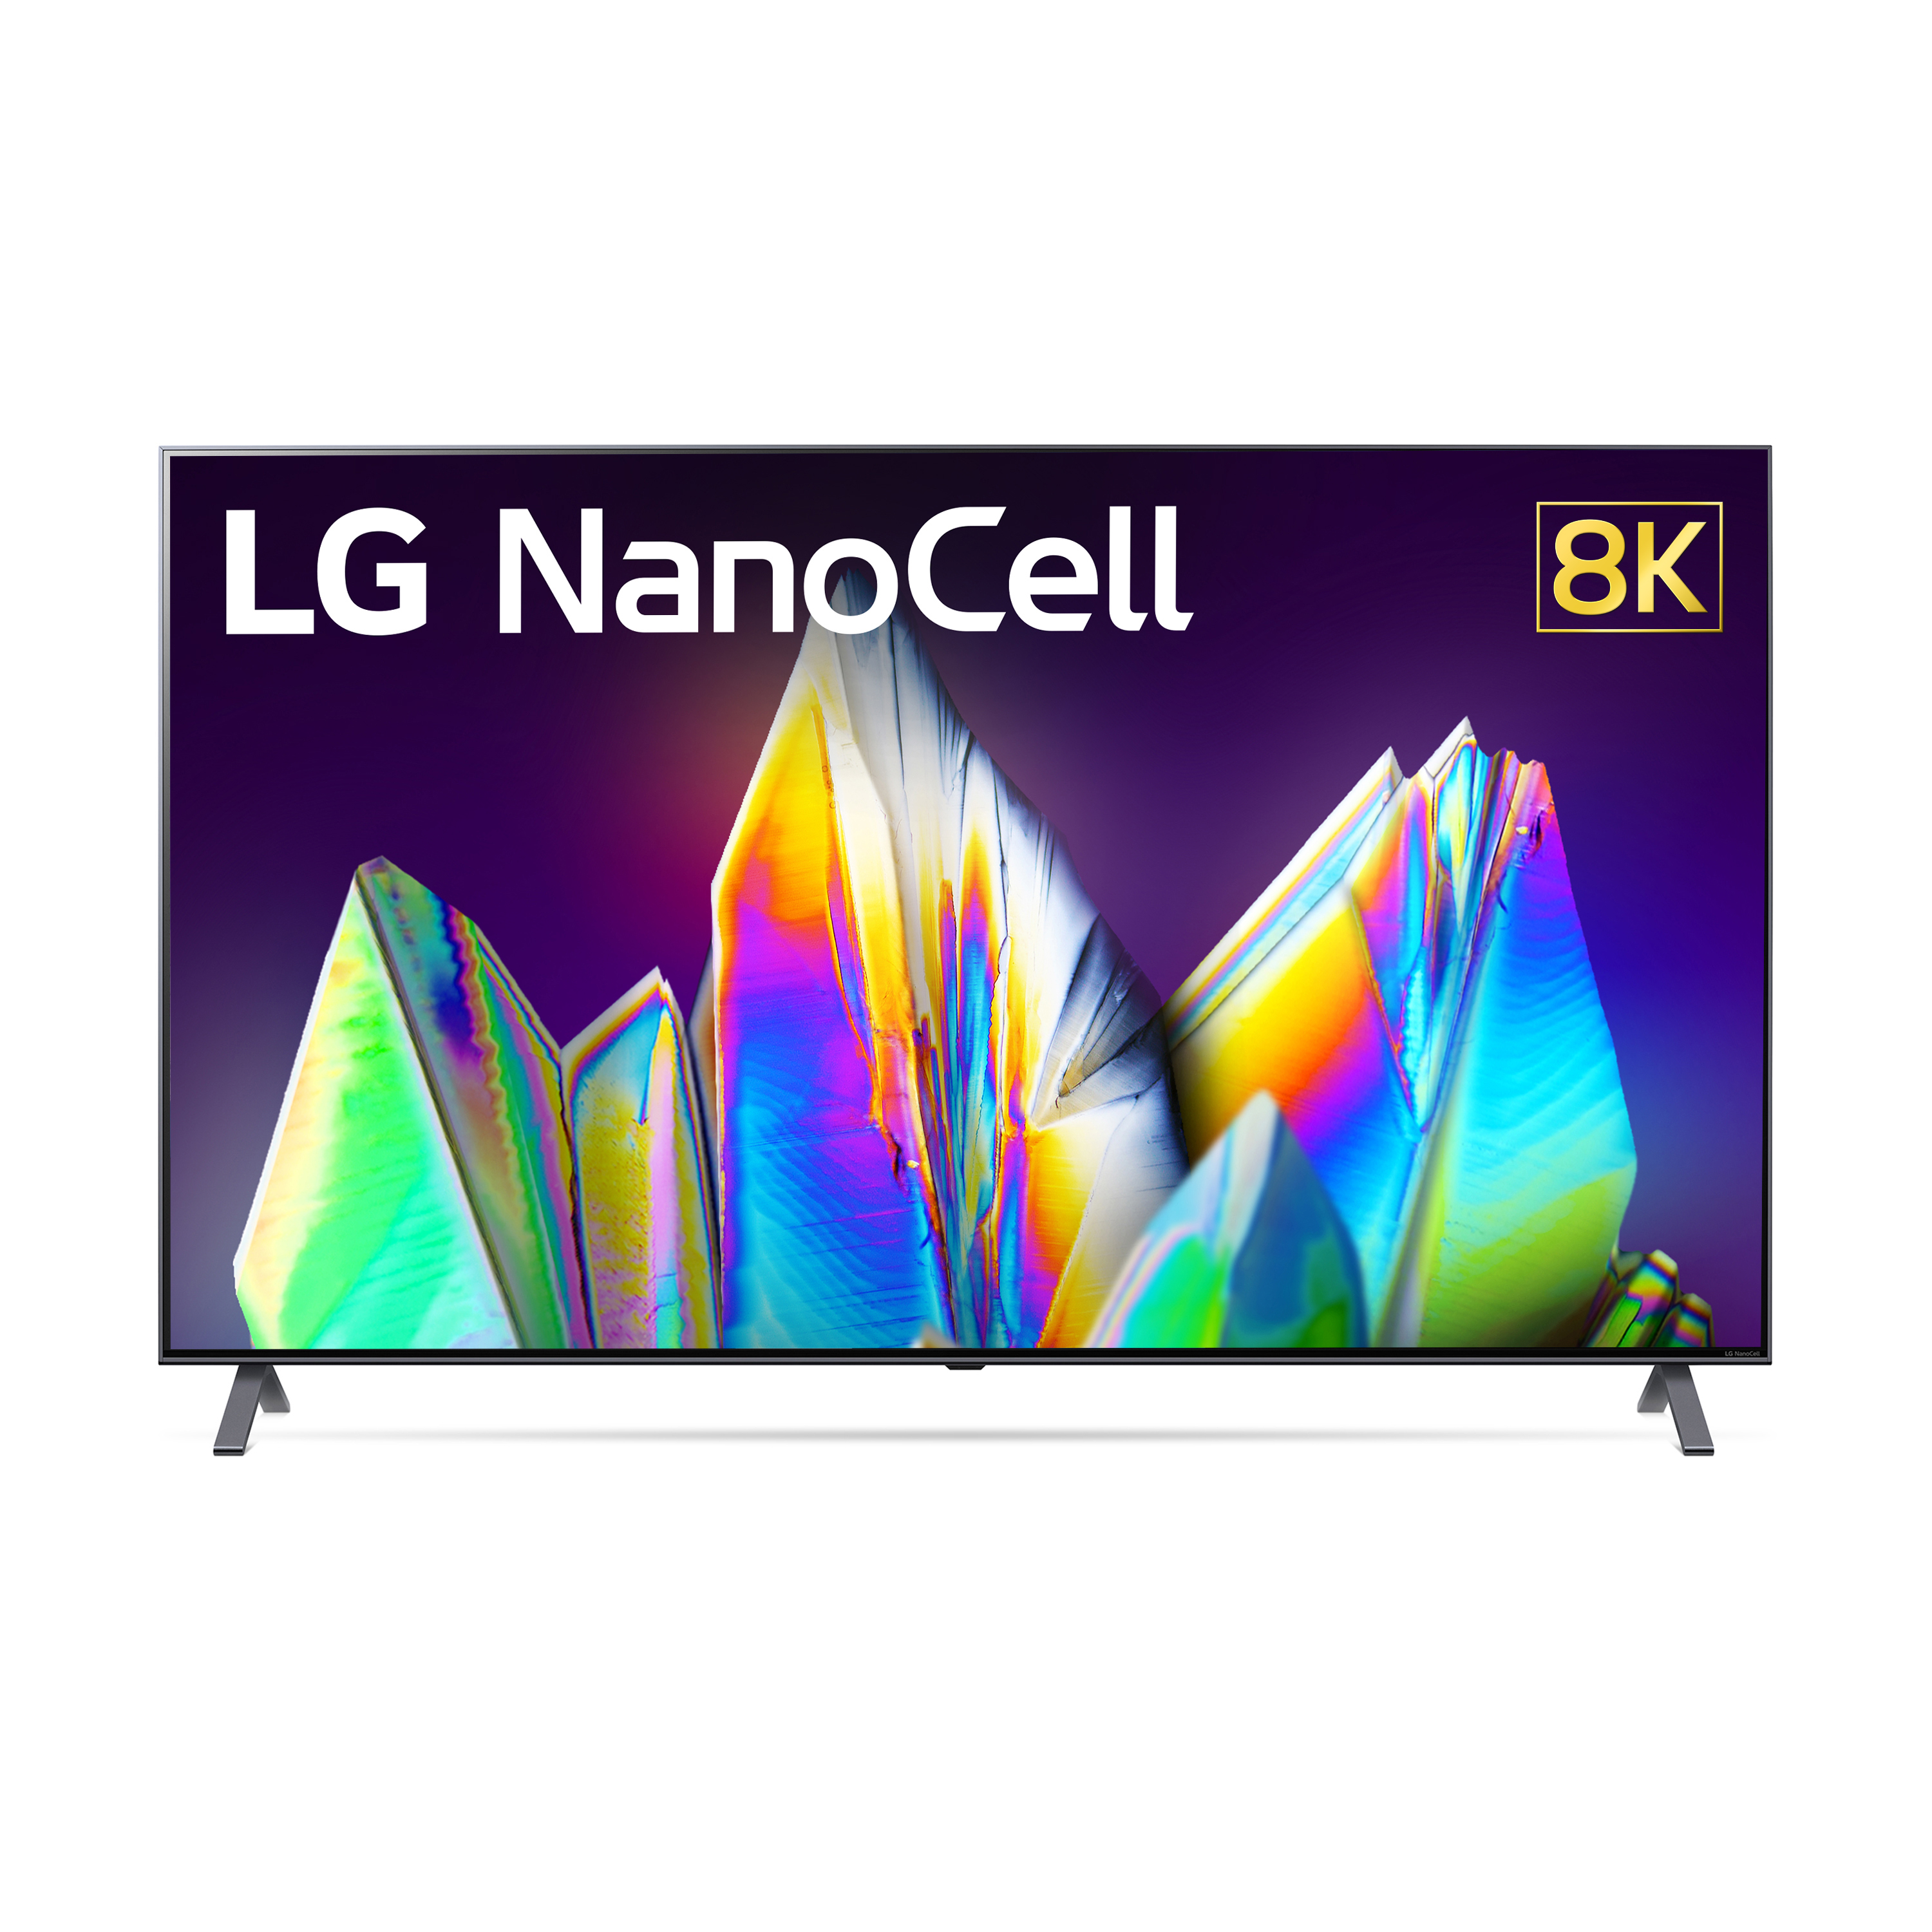 LG 65" Class 8K UHD 4320P NanoCell Smart TV with HDR 65NANO99UNA 2020 Model - image 1 of 37